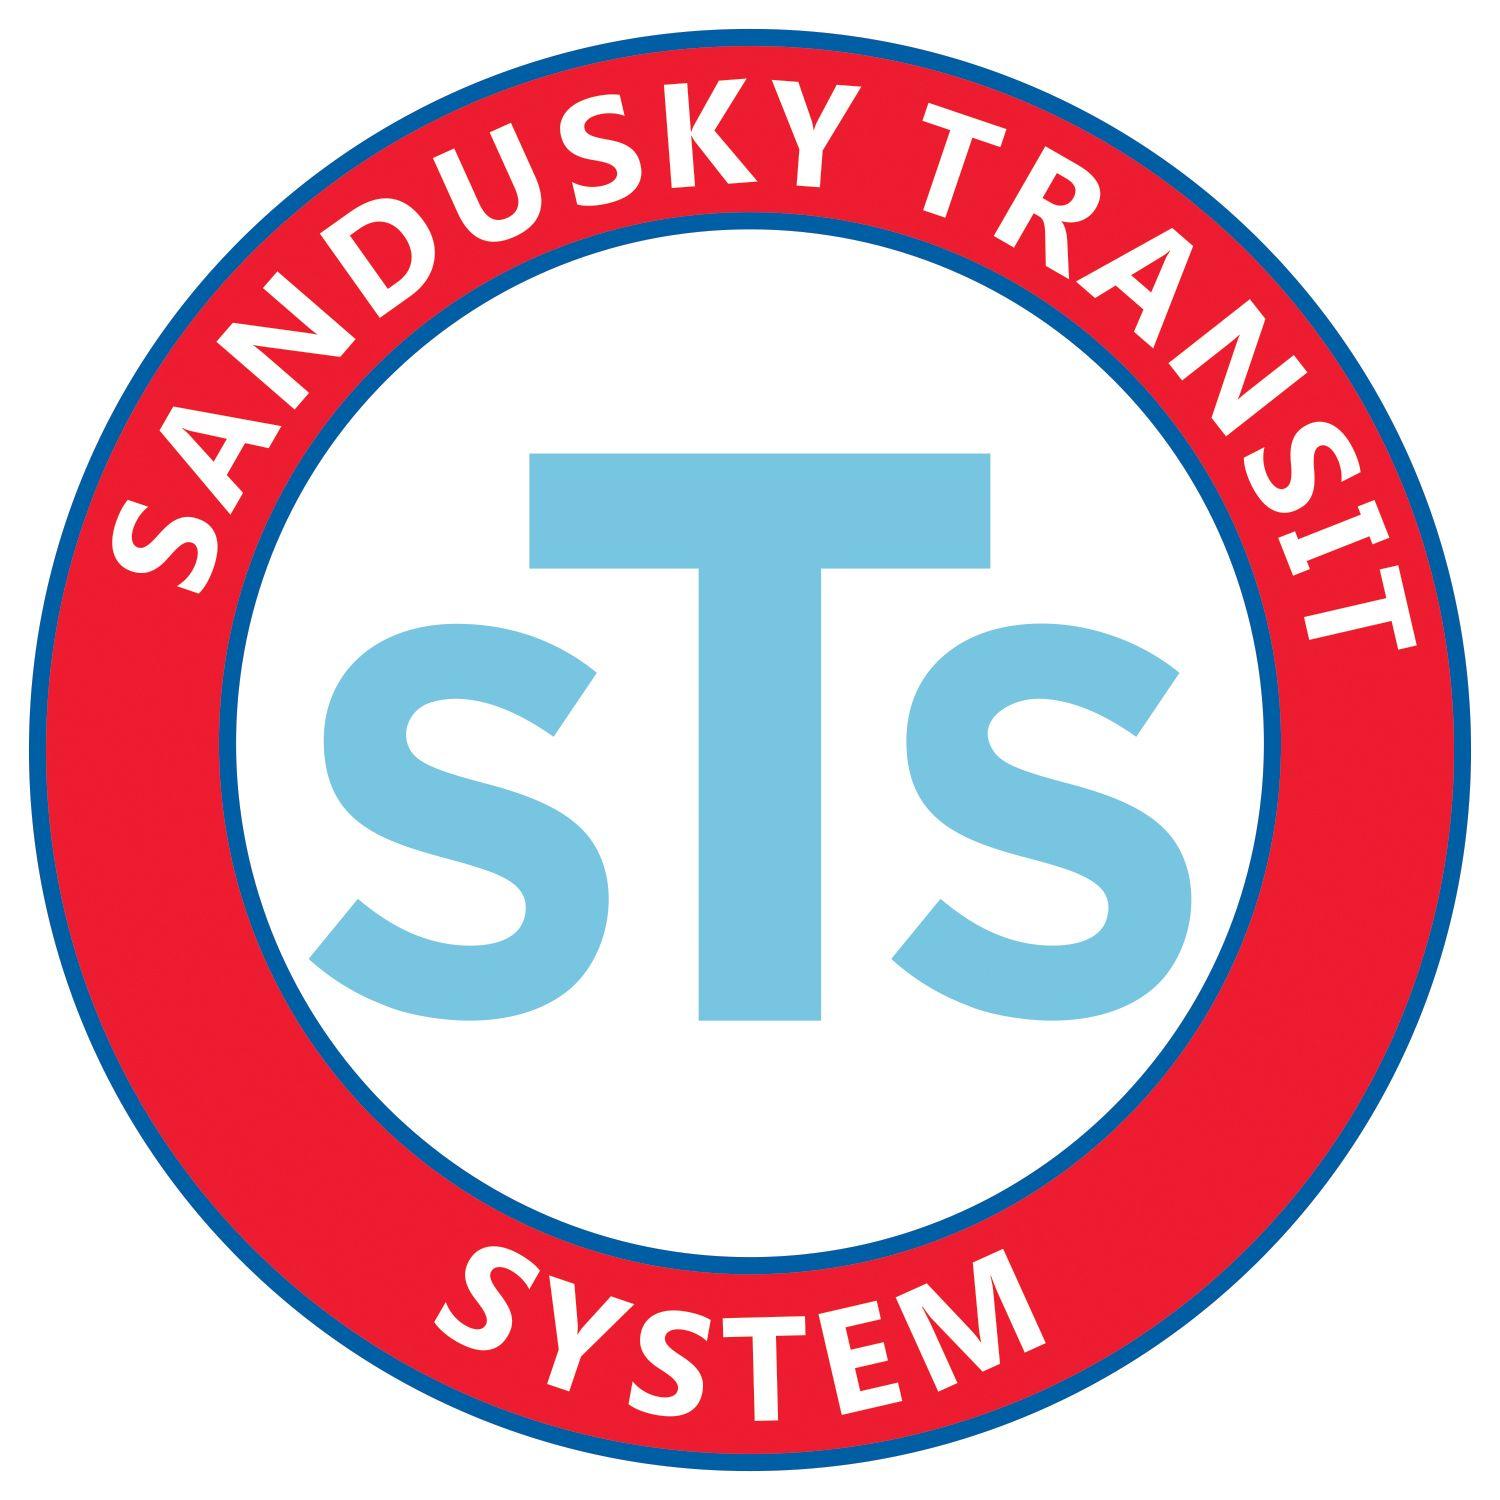 Sandusky Logo - Welcome to City of Sandusky